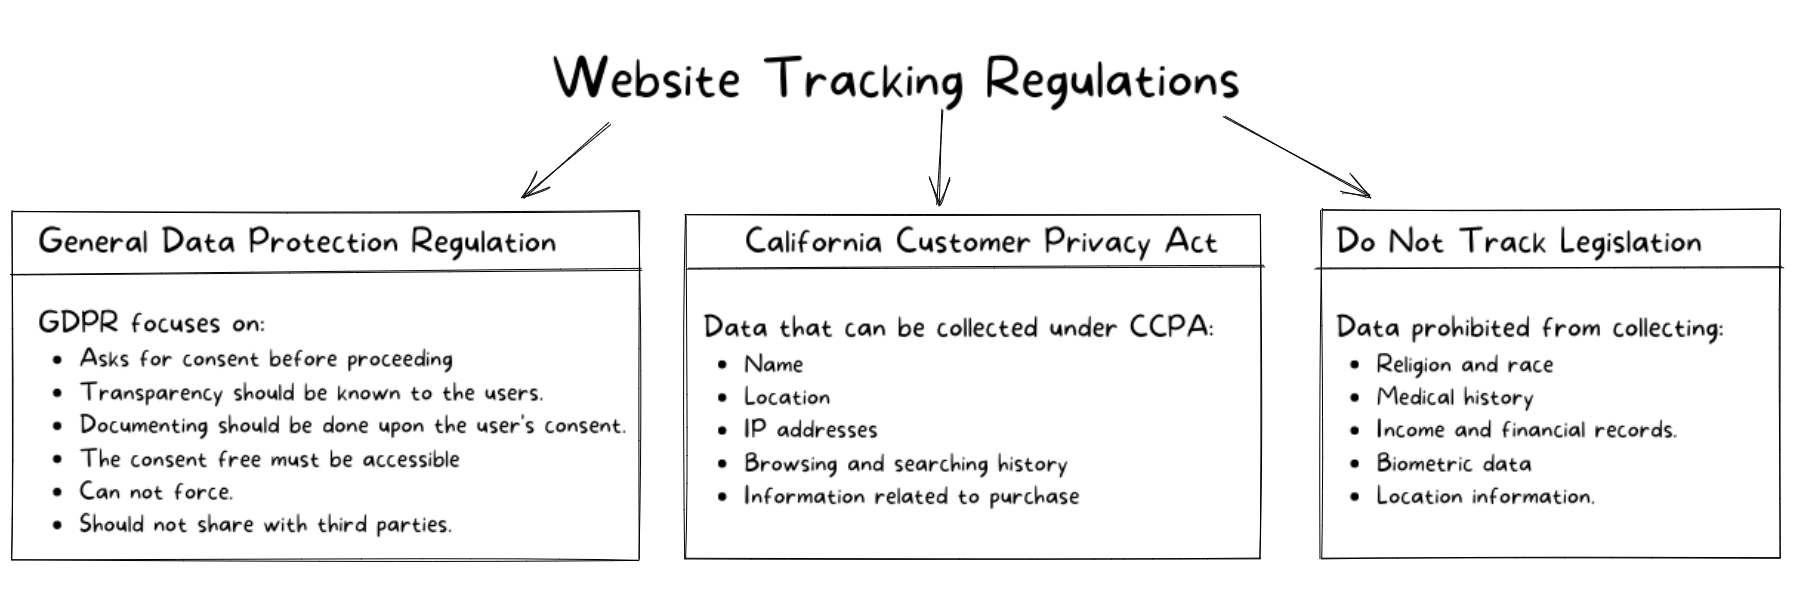 Website Tracking Regulations